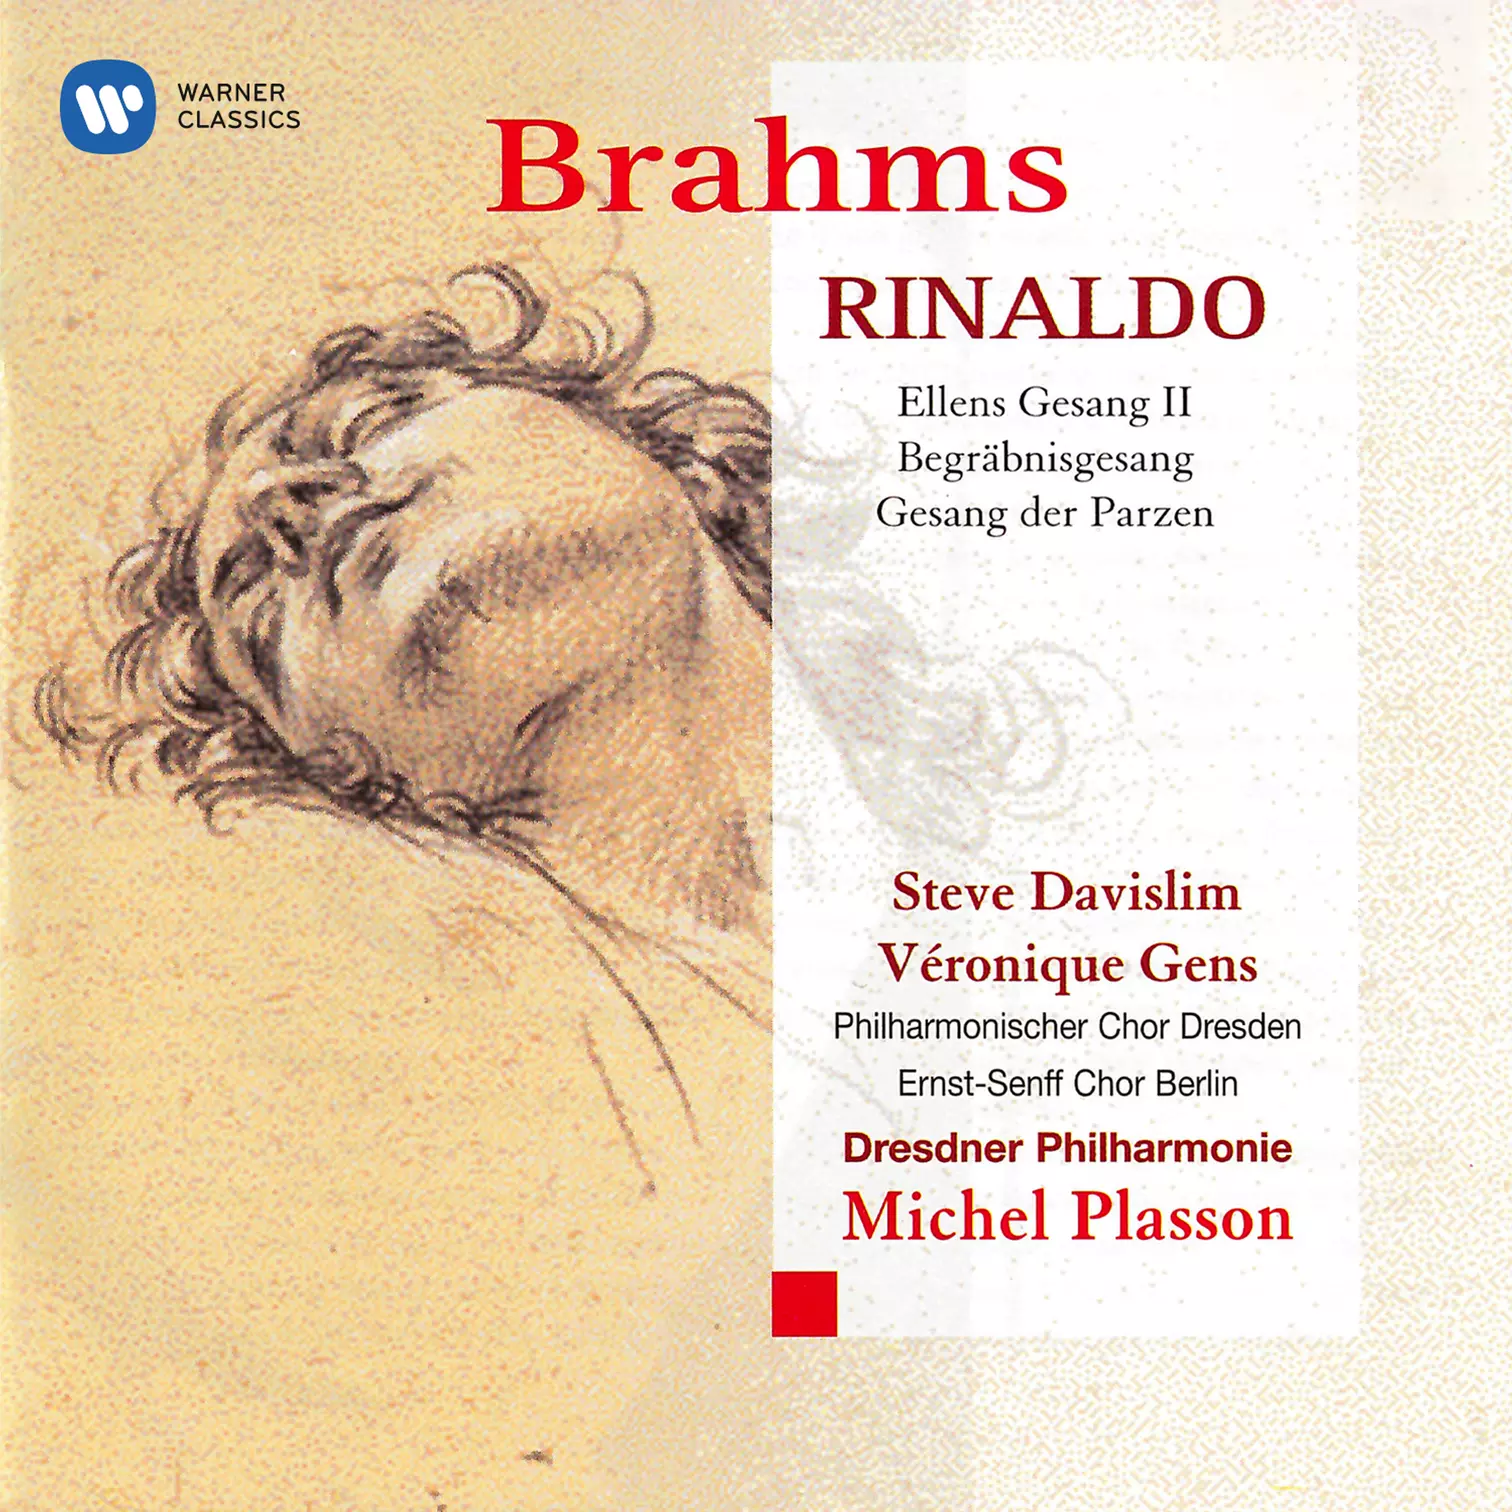 Brahms: Rinaldo, Ellens Gesang II, Begräbnisgesang & Gesang der Parzen